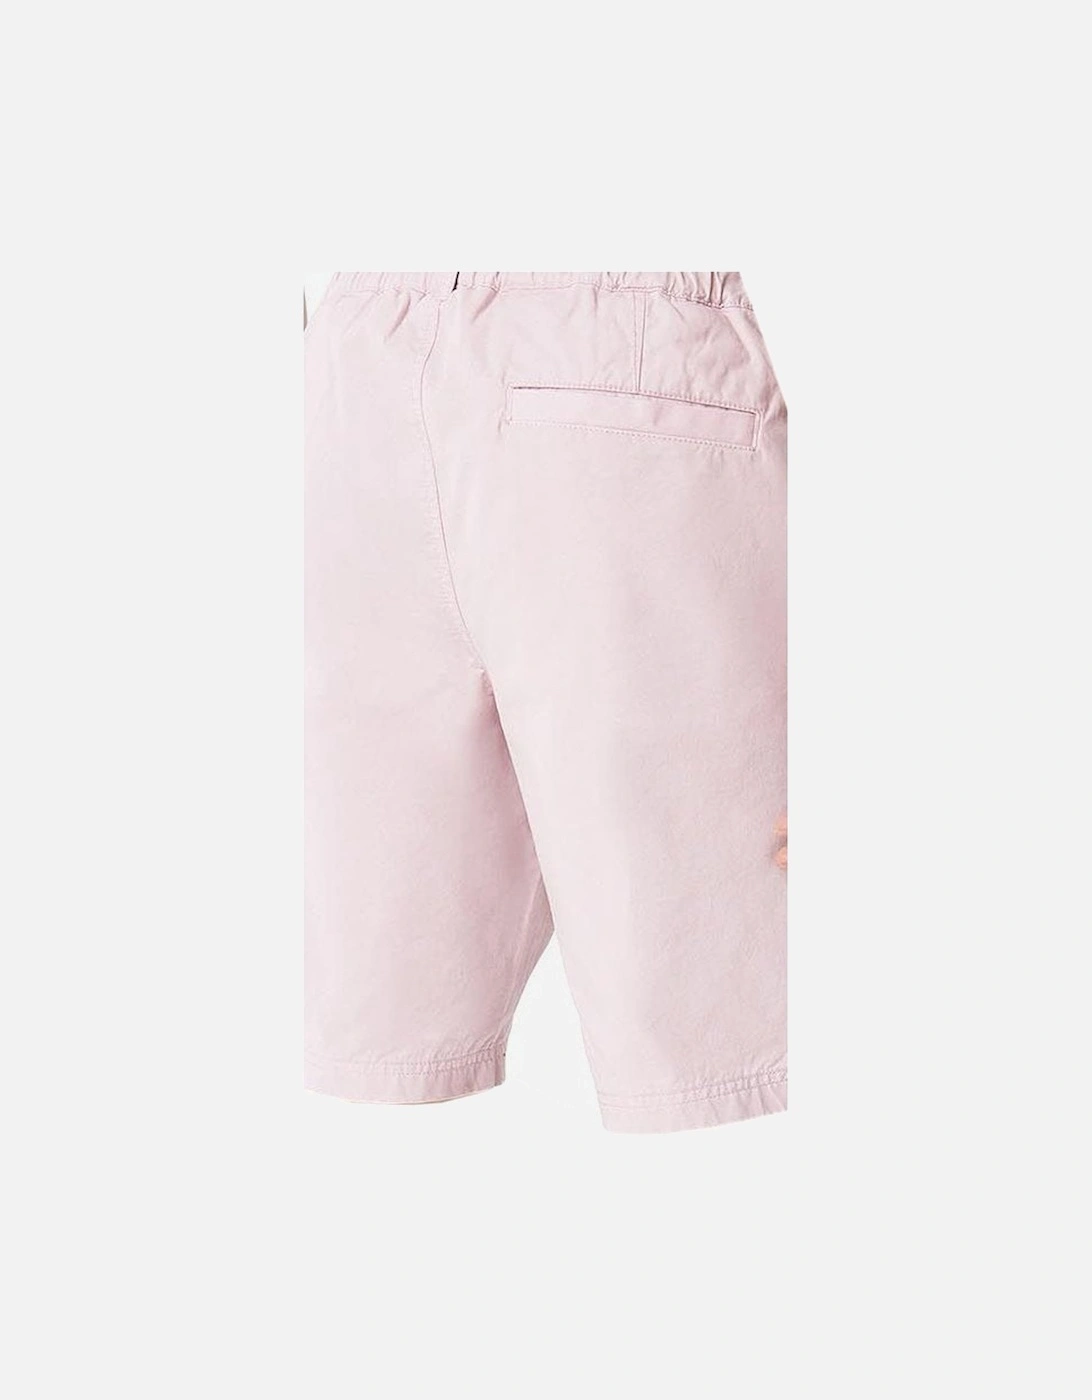 Men's Dusty Pink Cloud Shorts